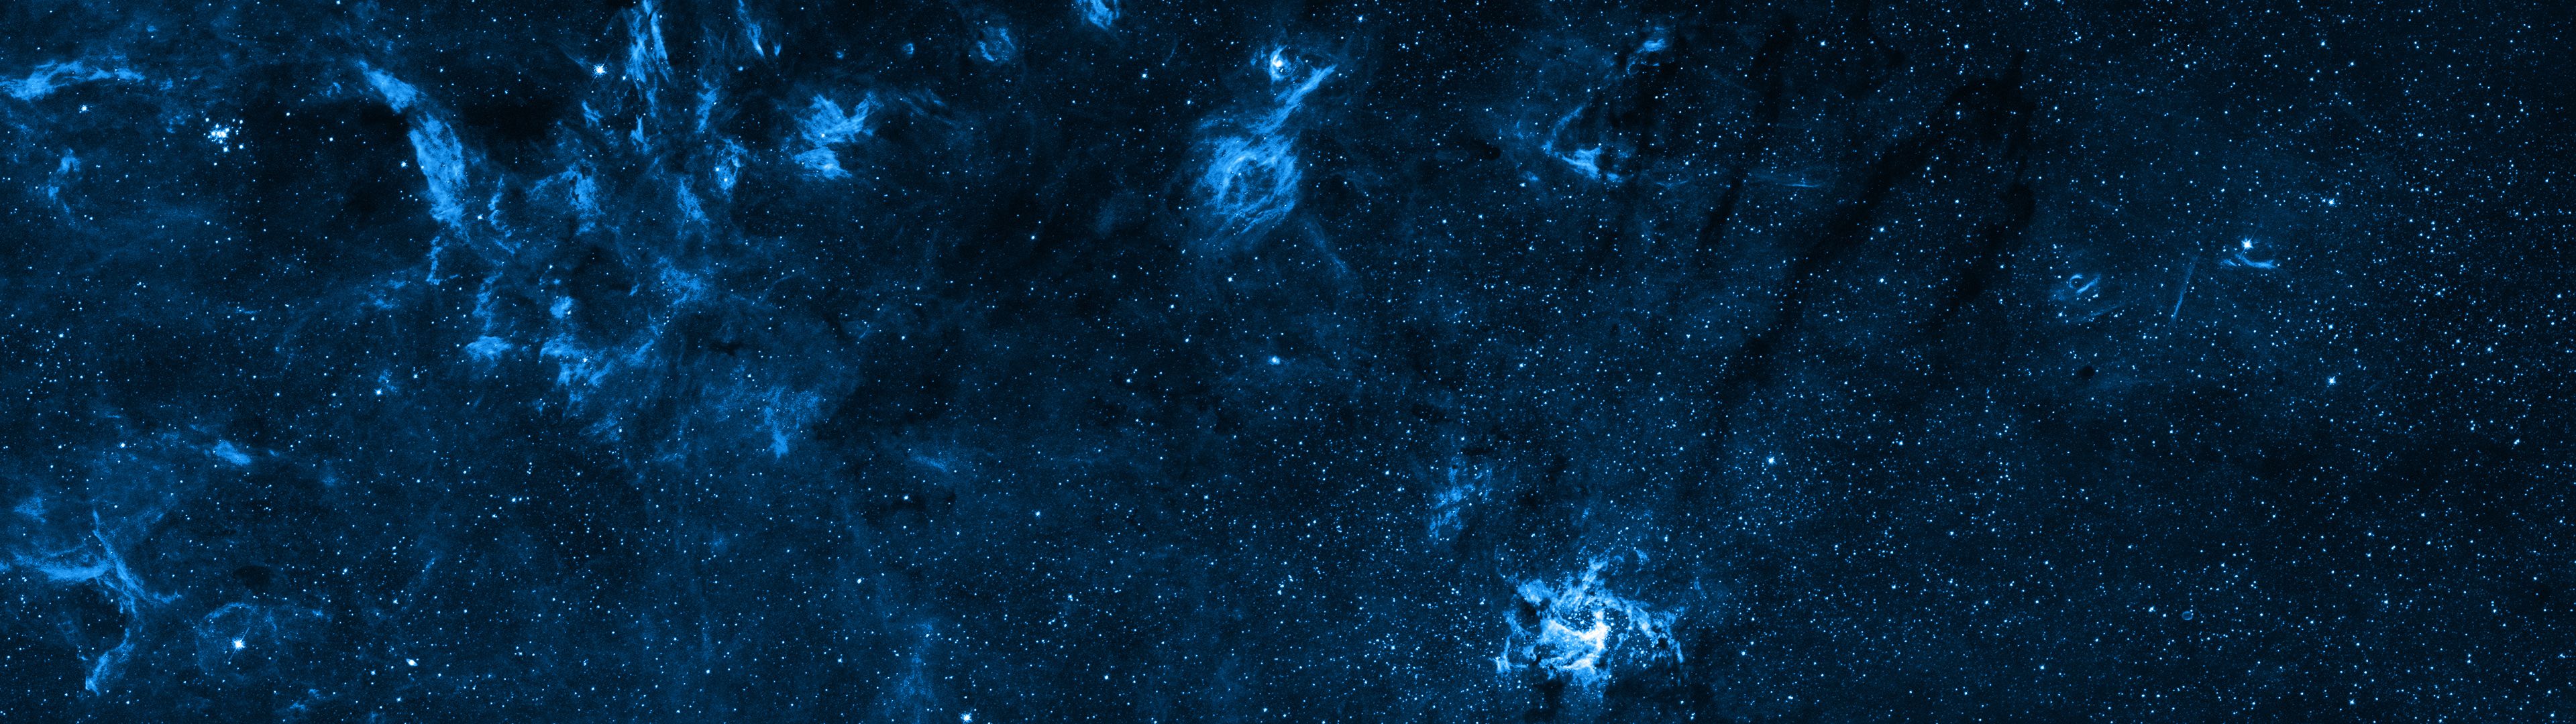 The Galactic Center Region of the Milky Way desktop wallpaper 287